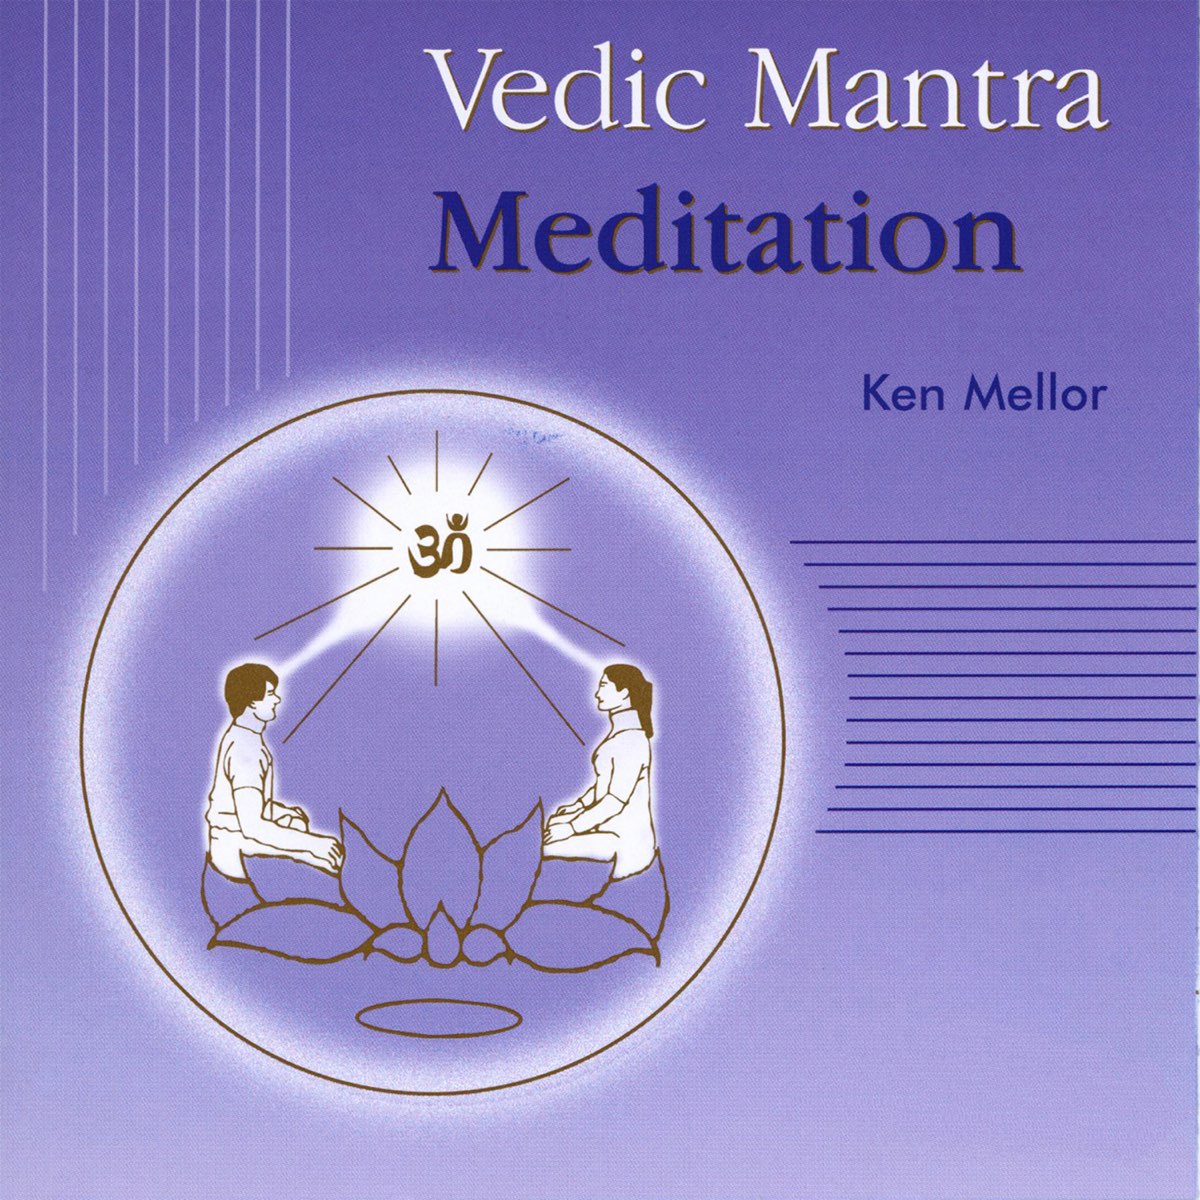 ‎Vedic Mantra Meditation by Ken Mellor on iTunes